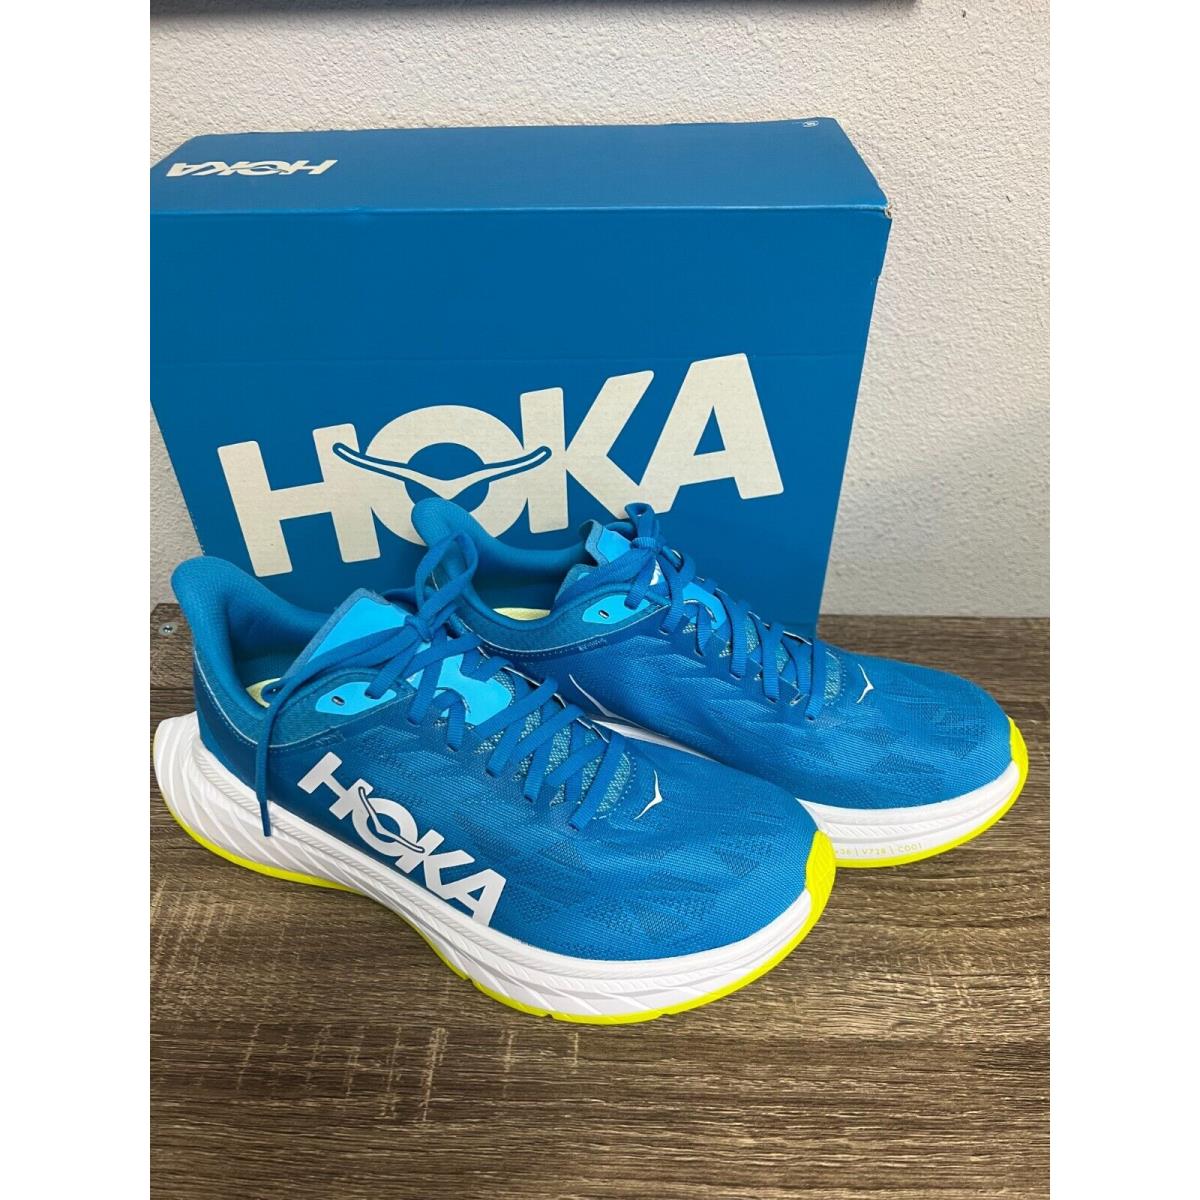 Mens Hoka One One Running Shoes Dbtcr Carbon X2 - Blue Citrus 1113526